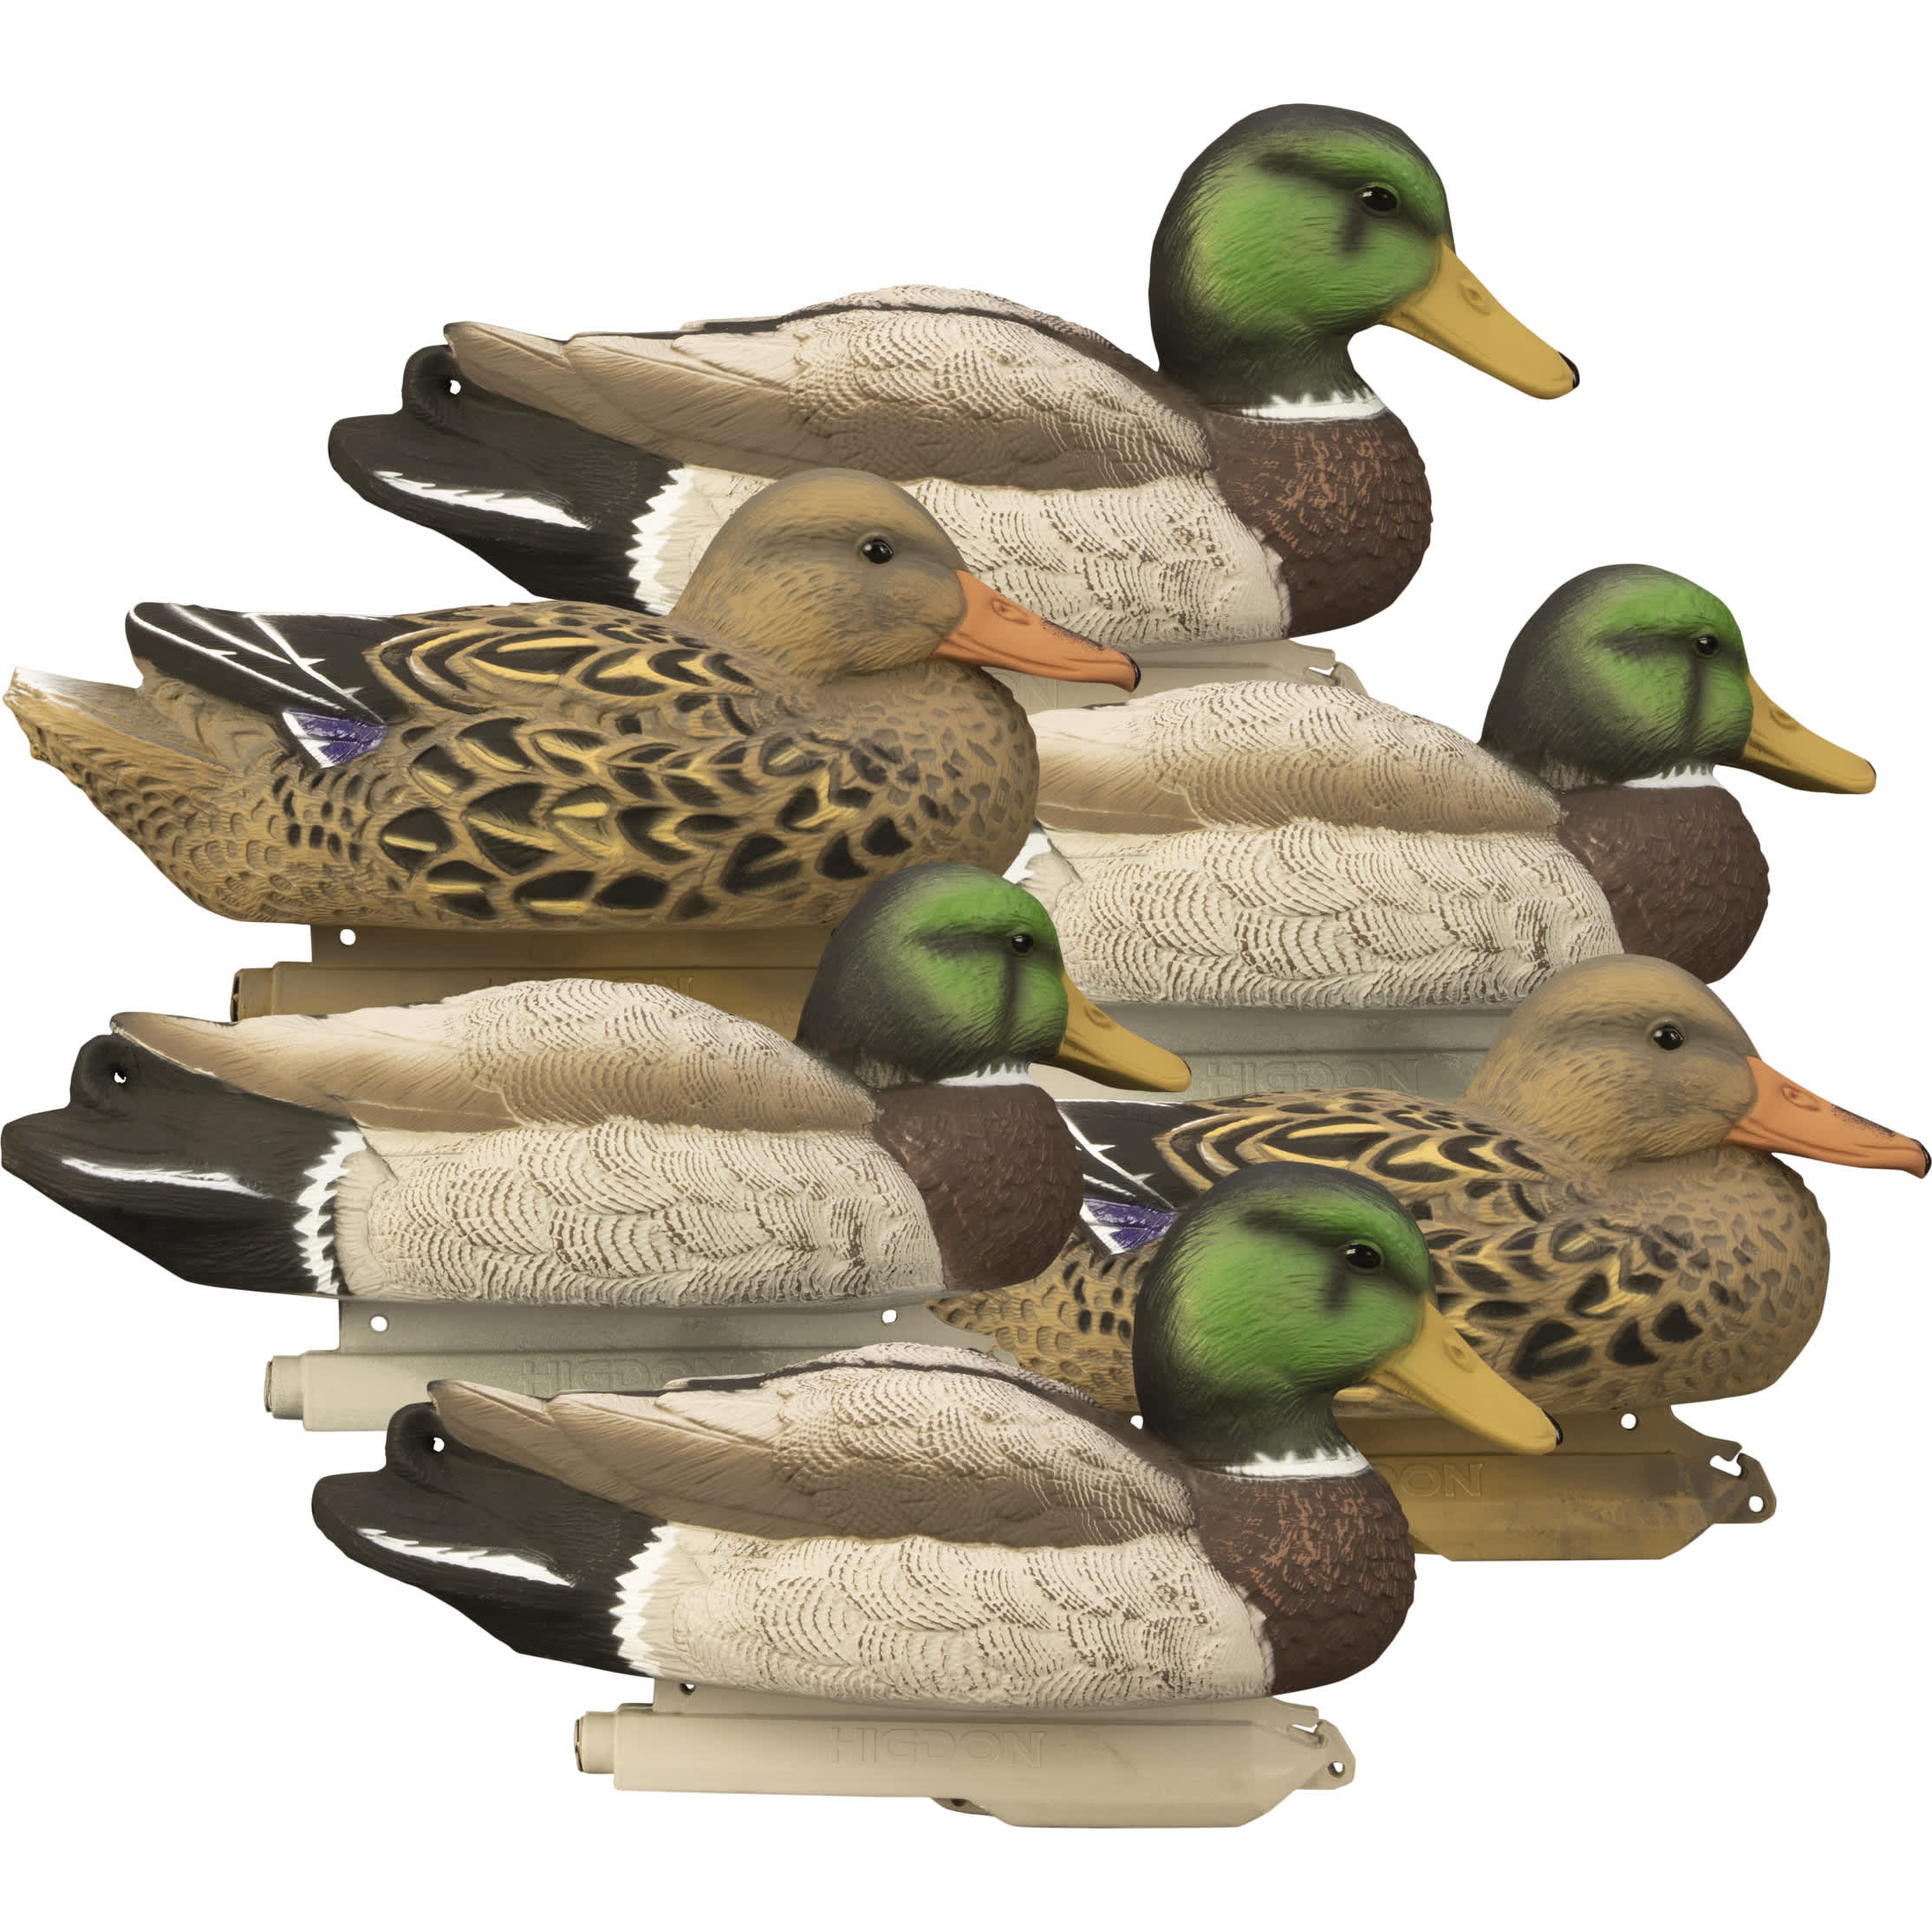 Higdon Outdoors Standard Foam-Filled Mallard Duck Decoys